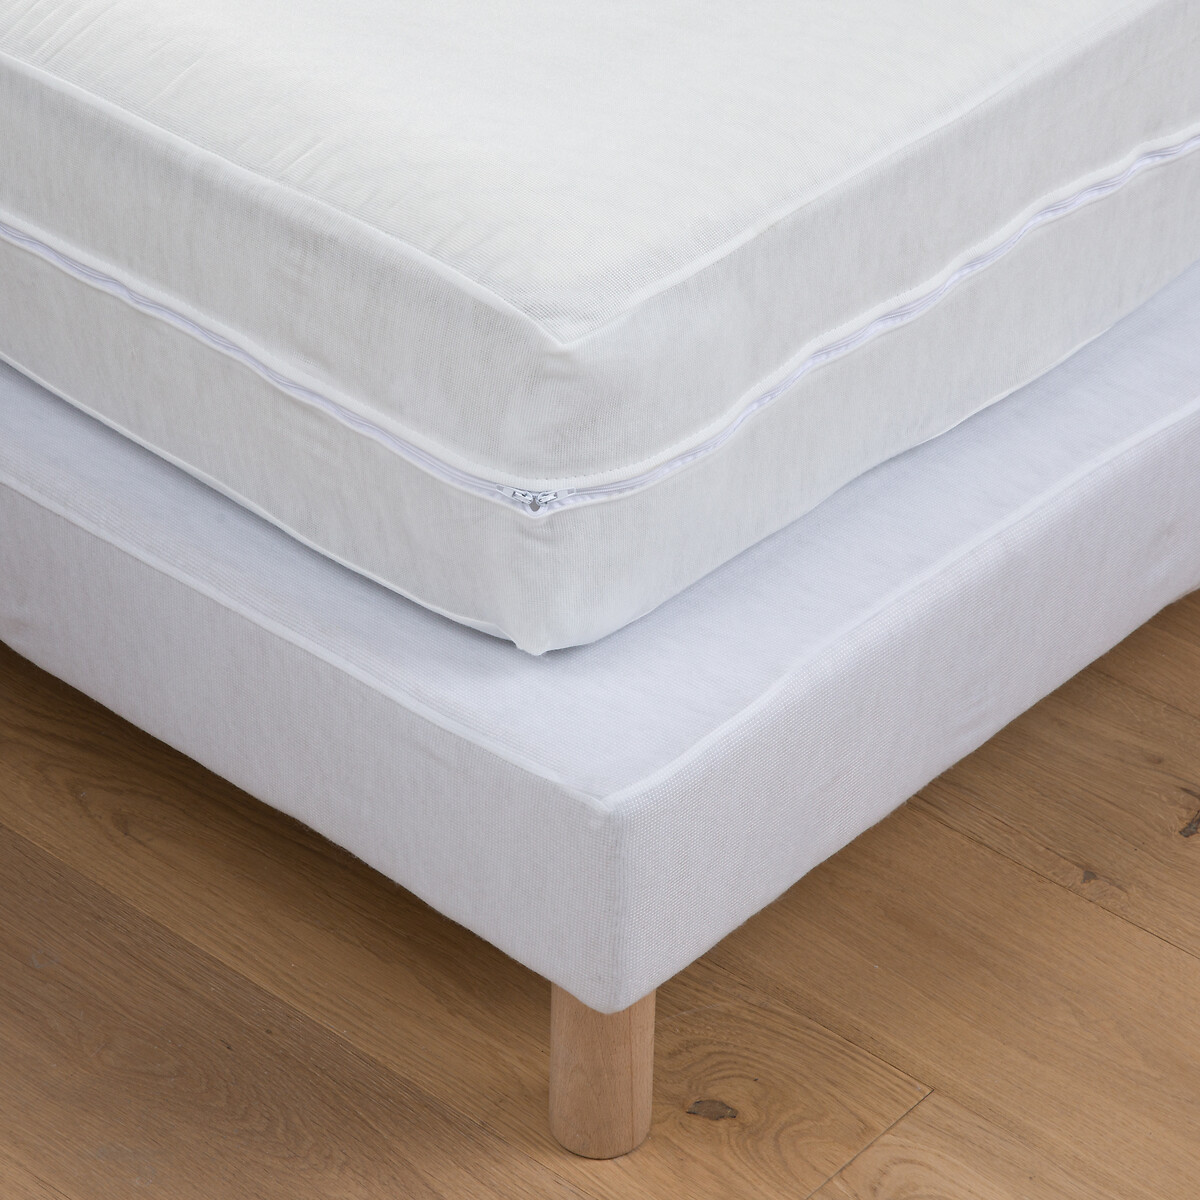 Чехол La Redoute Для кровати 90 x 190 см белый, размер 90 x 190 см